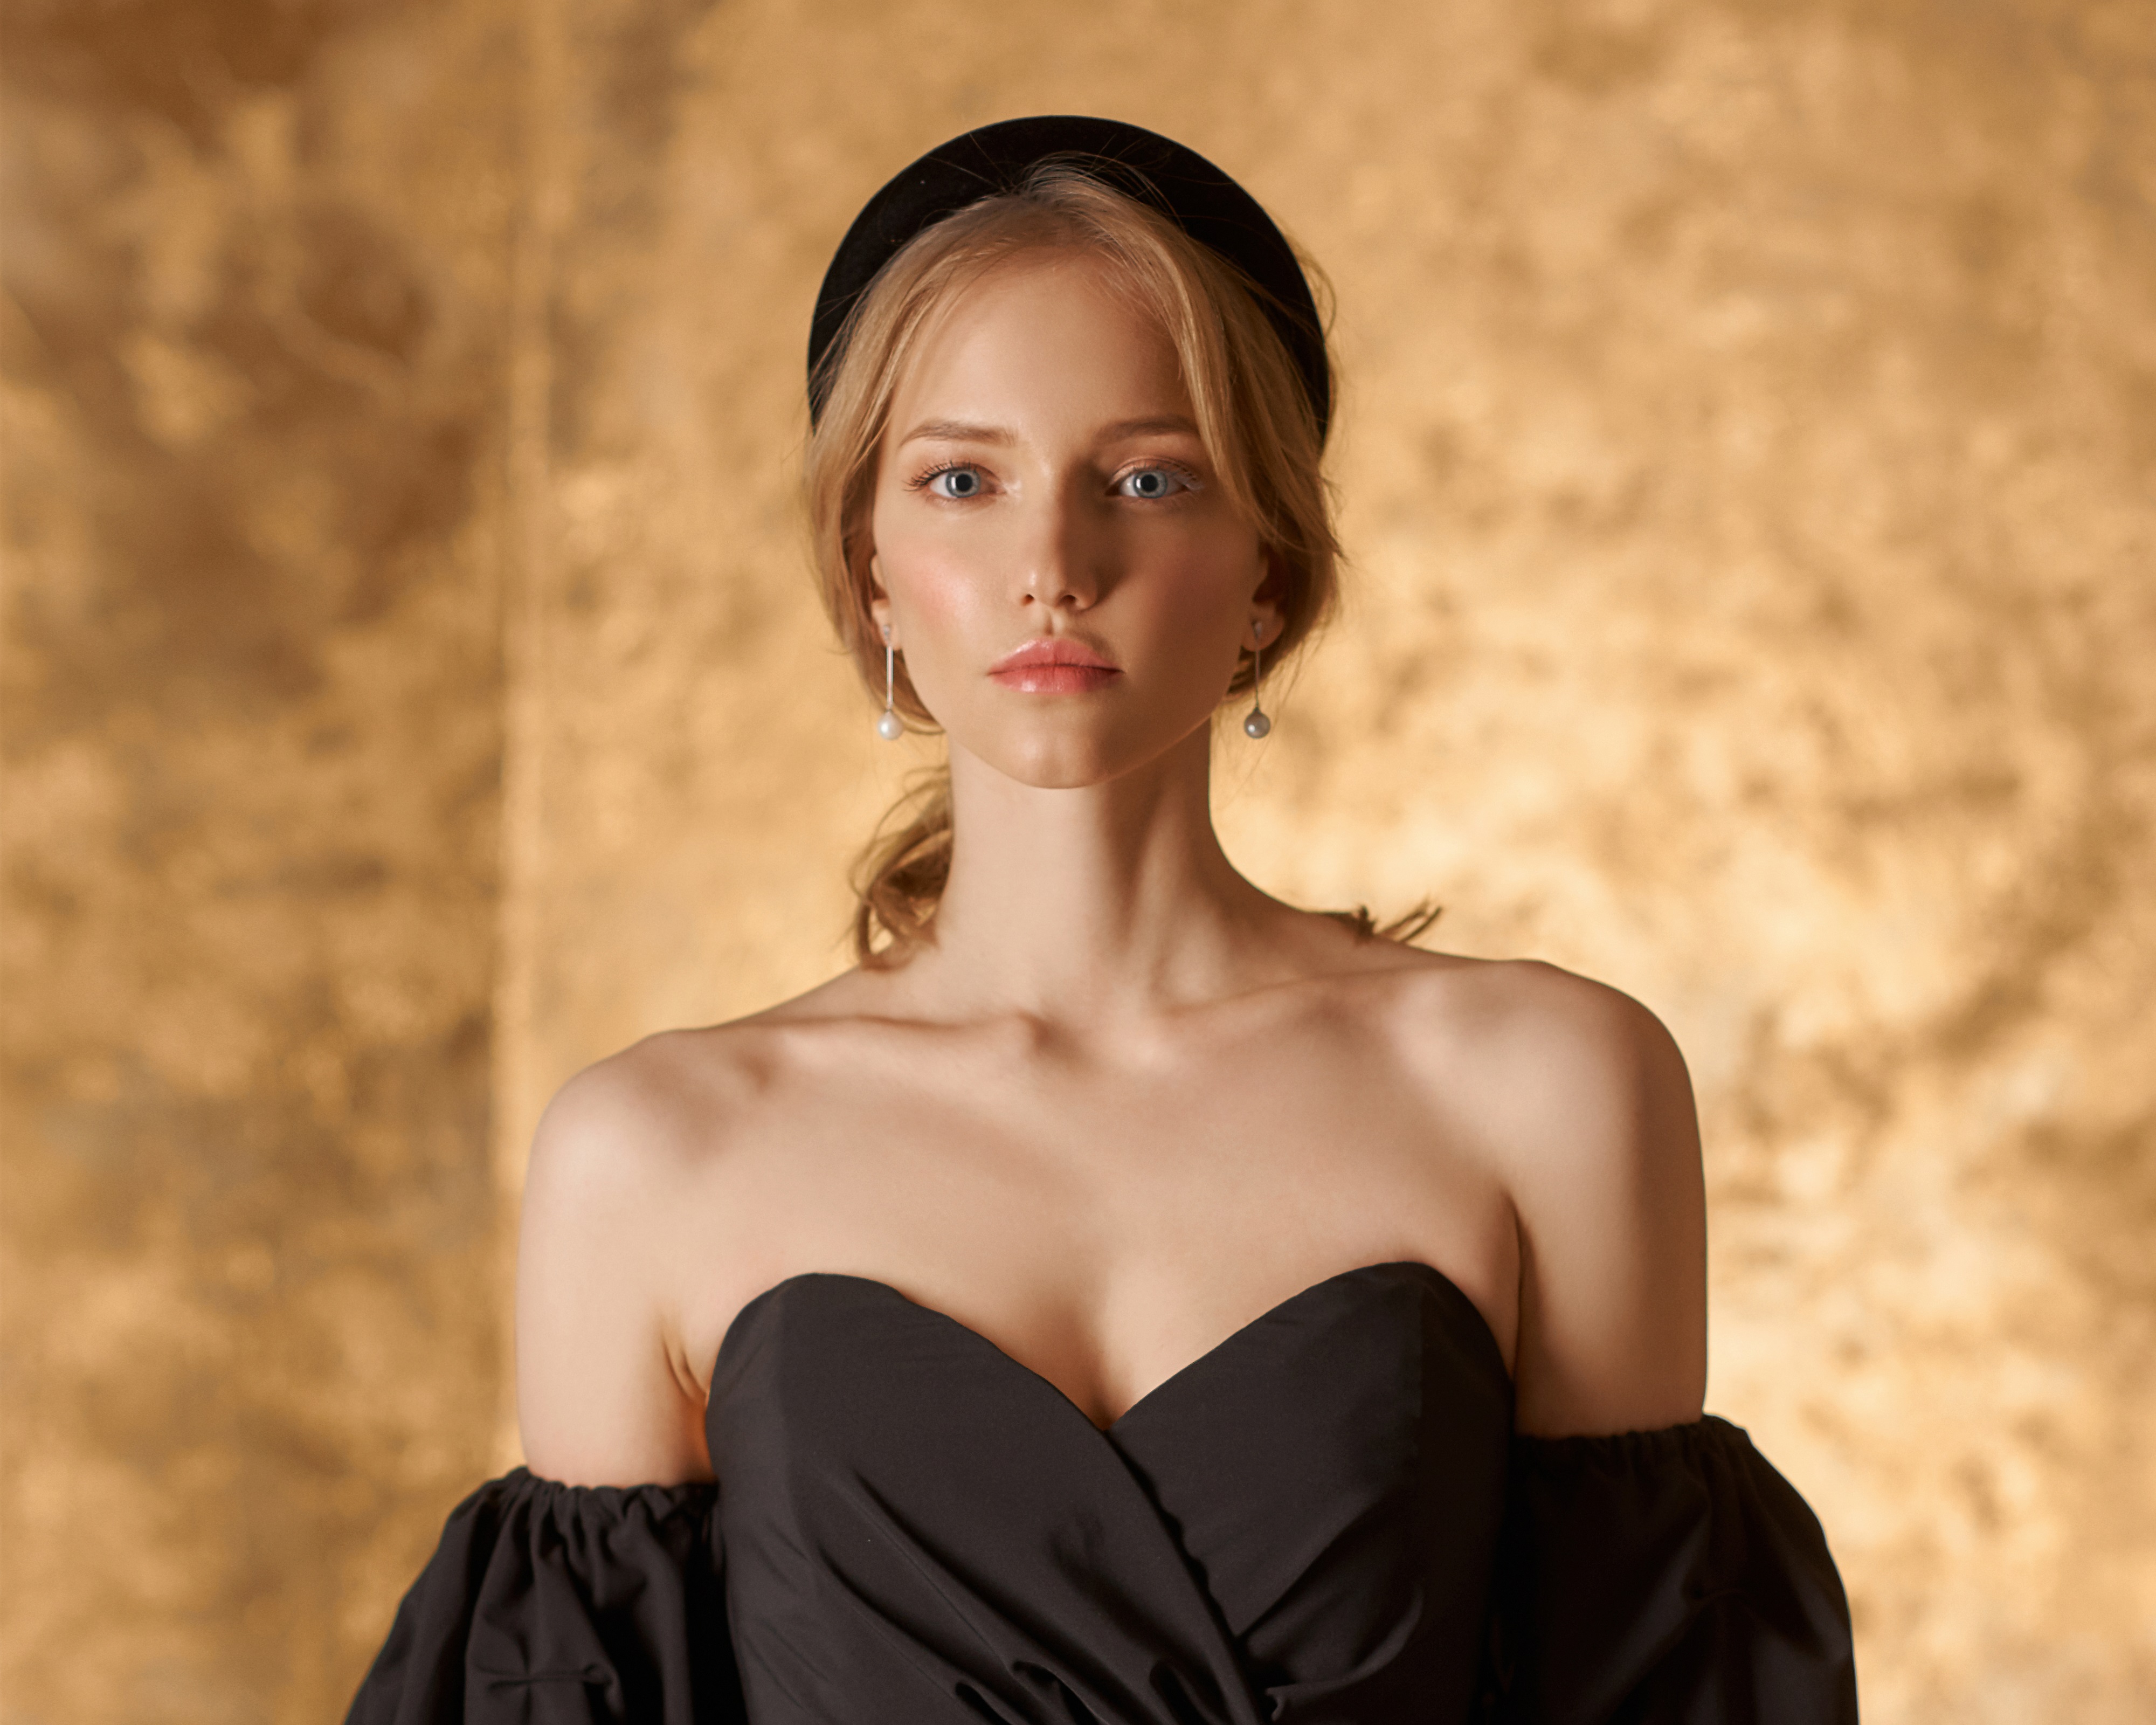 Women Blue Eyes Makeup Blonde Looking At Viewer Model Fashion Black Clothing Portrait Standing 4000x3200